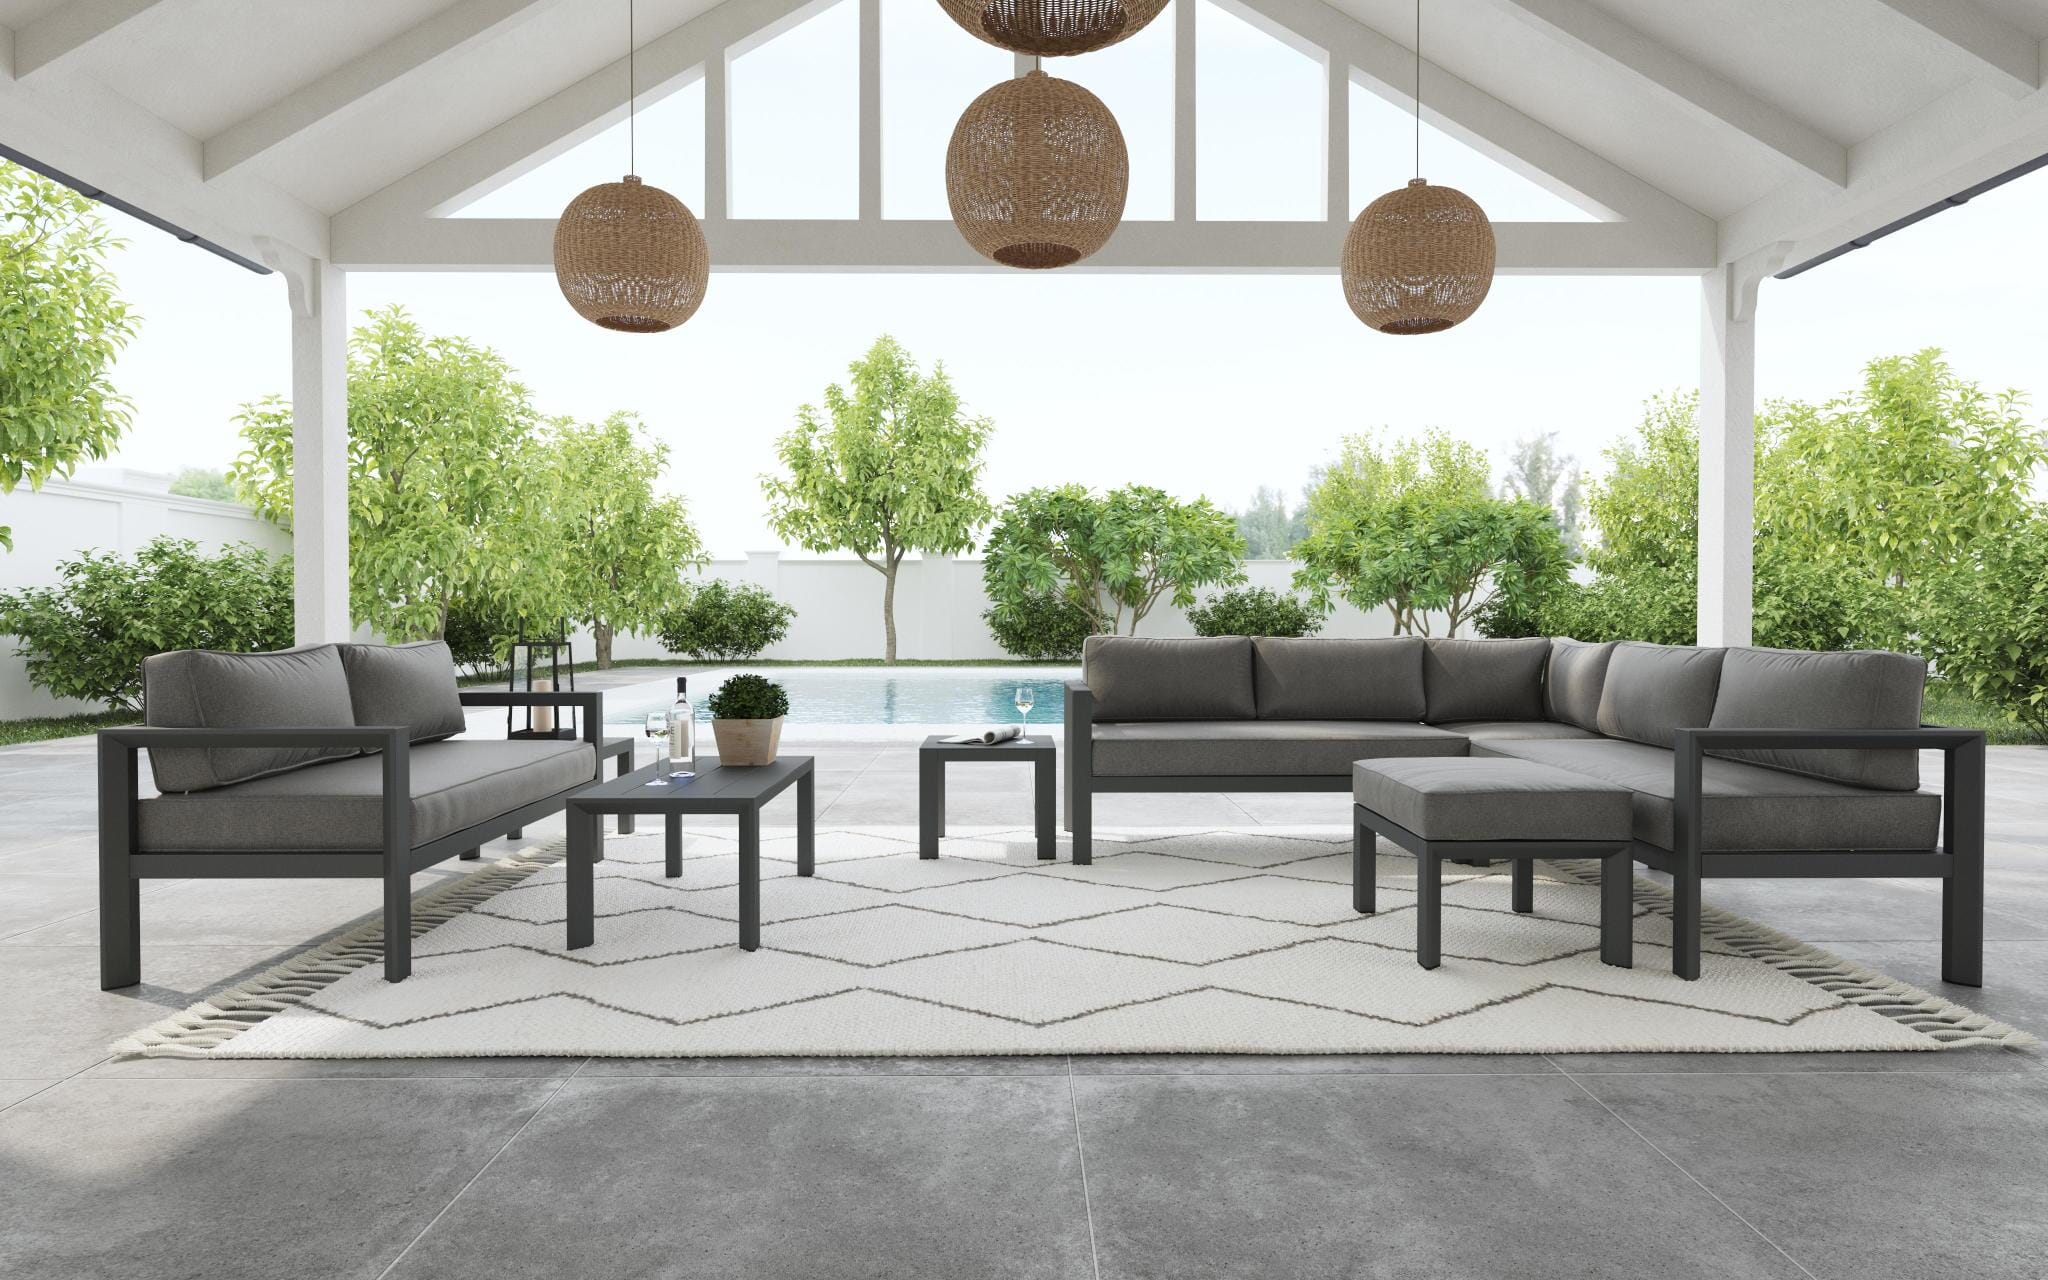 Modern & Contemporary Outdoor Aluminum Loveseat By Grayton Outdoor Seating Grayton